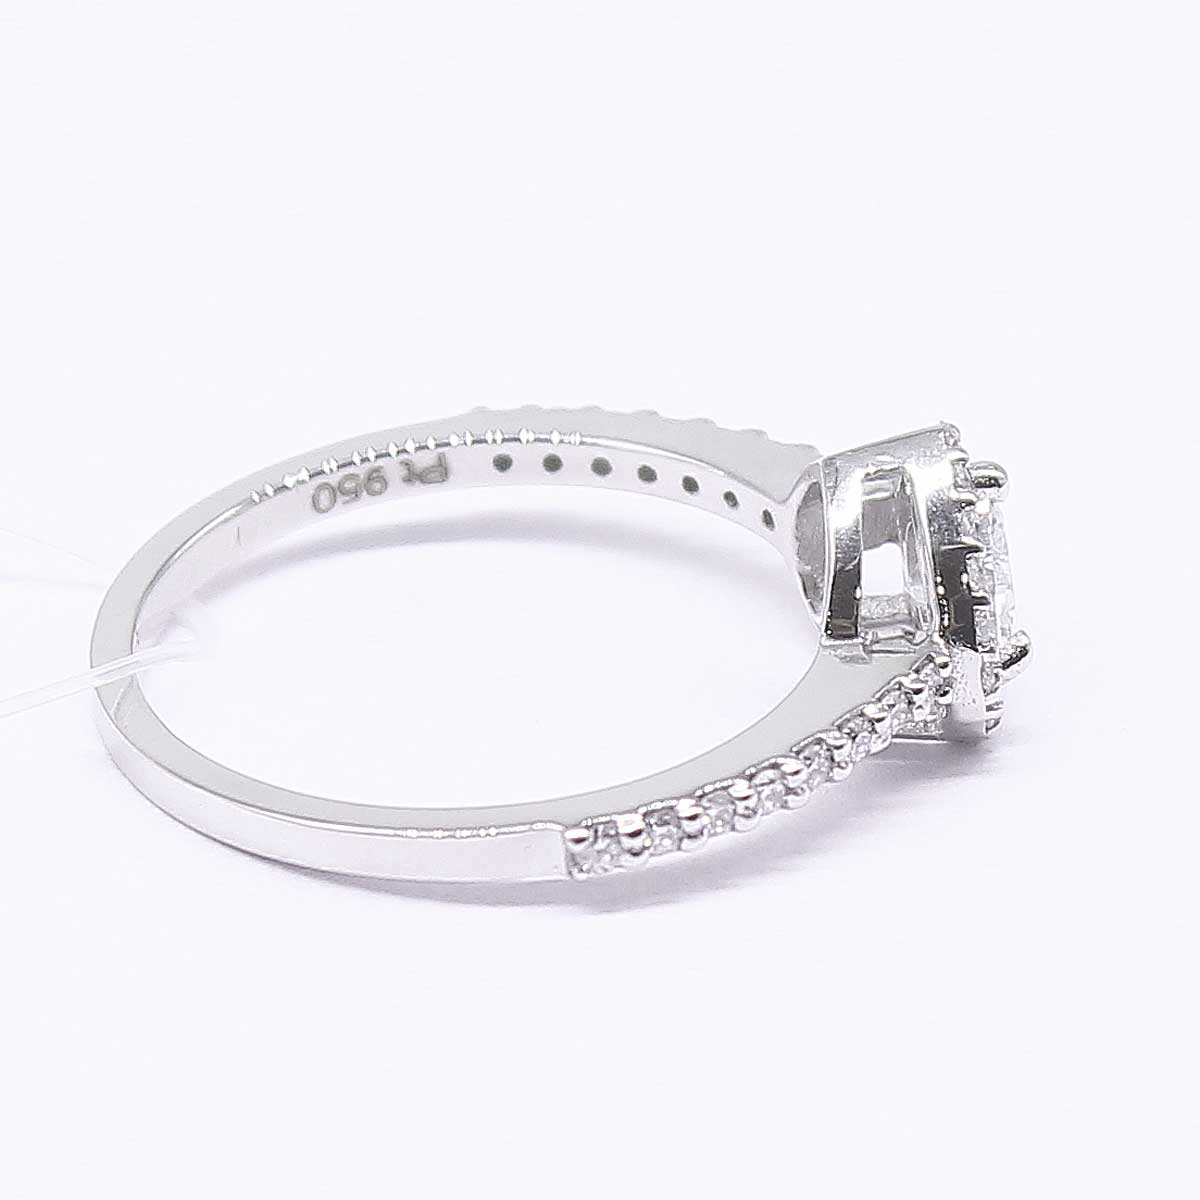 Heart Shaped Engagement Ring | Bijoux Majesty